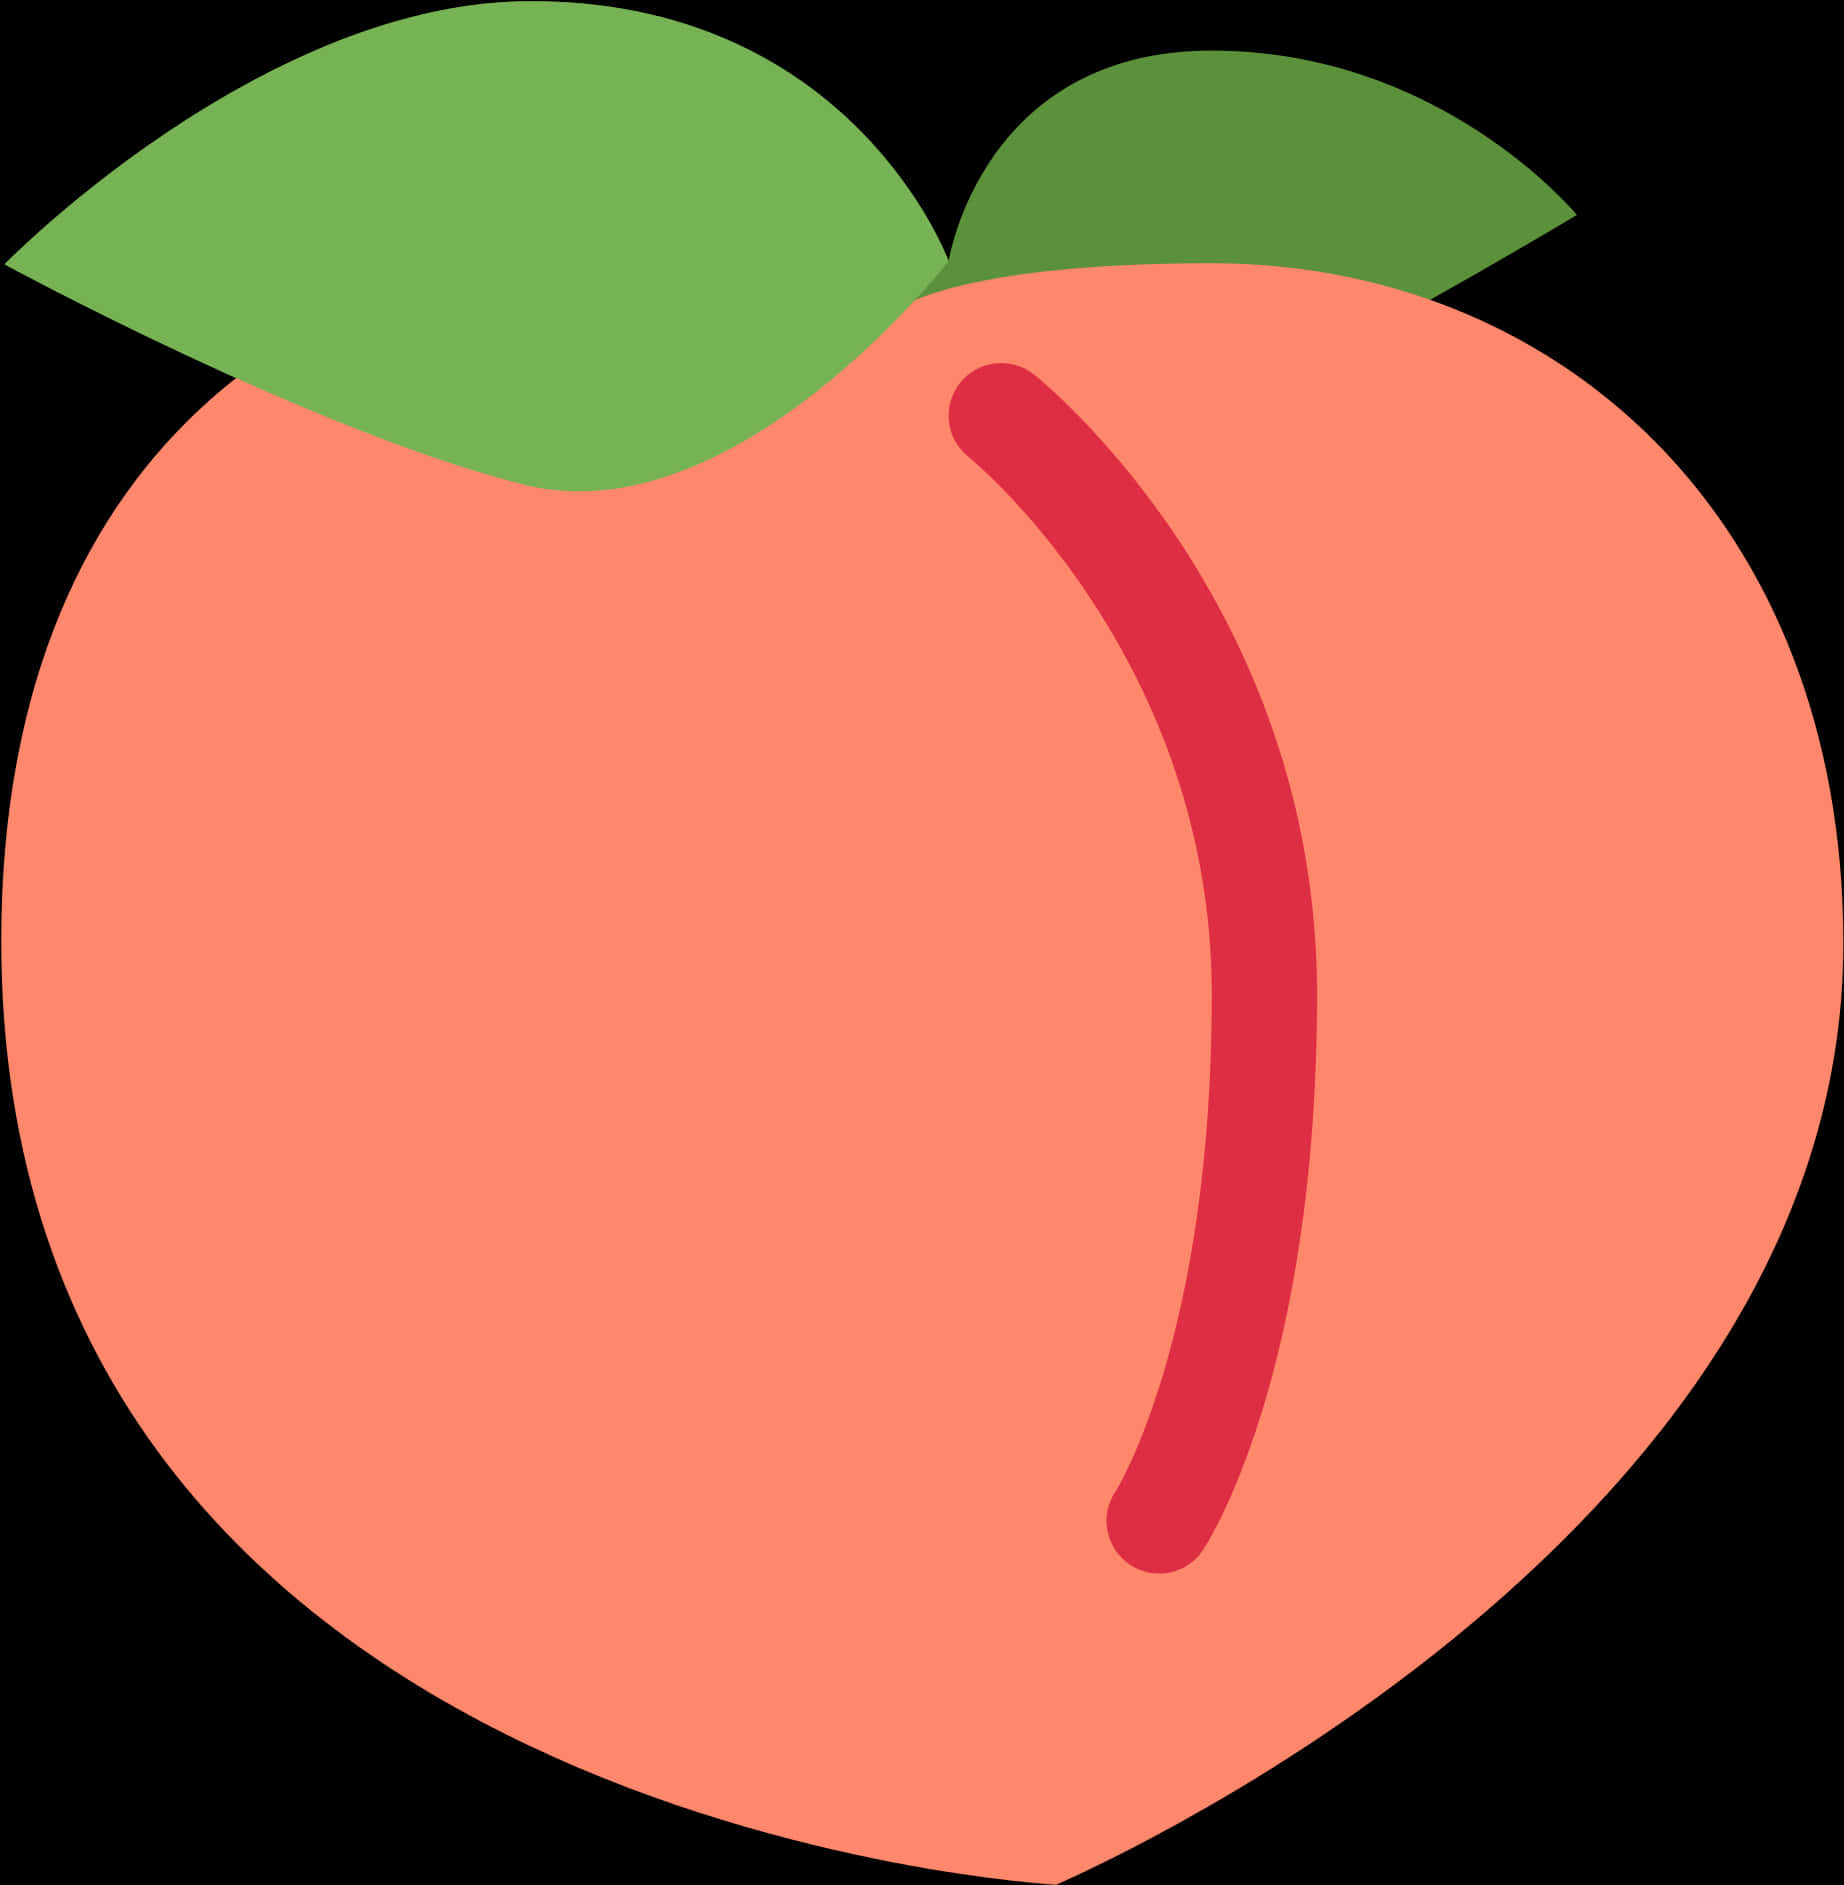 Stylized Peach Graphic